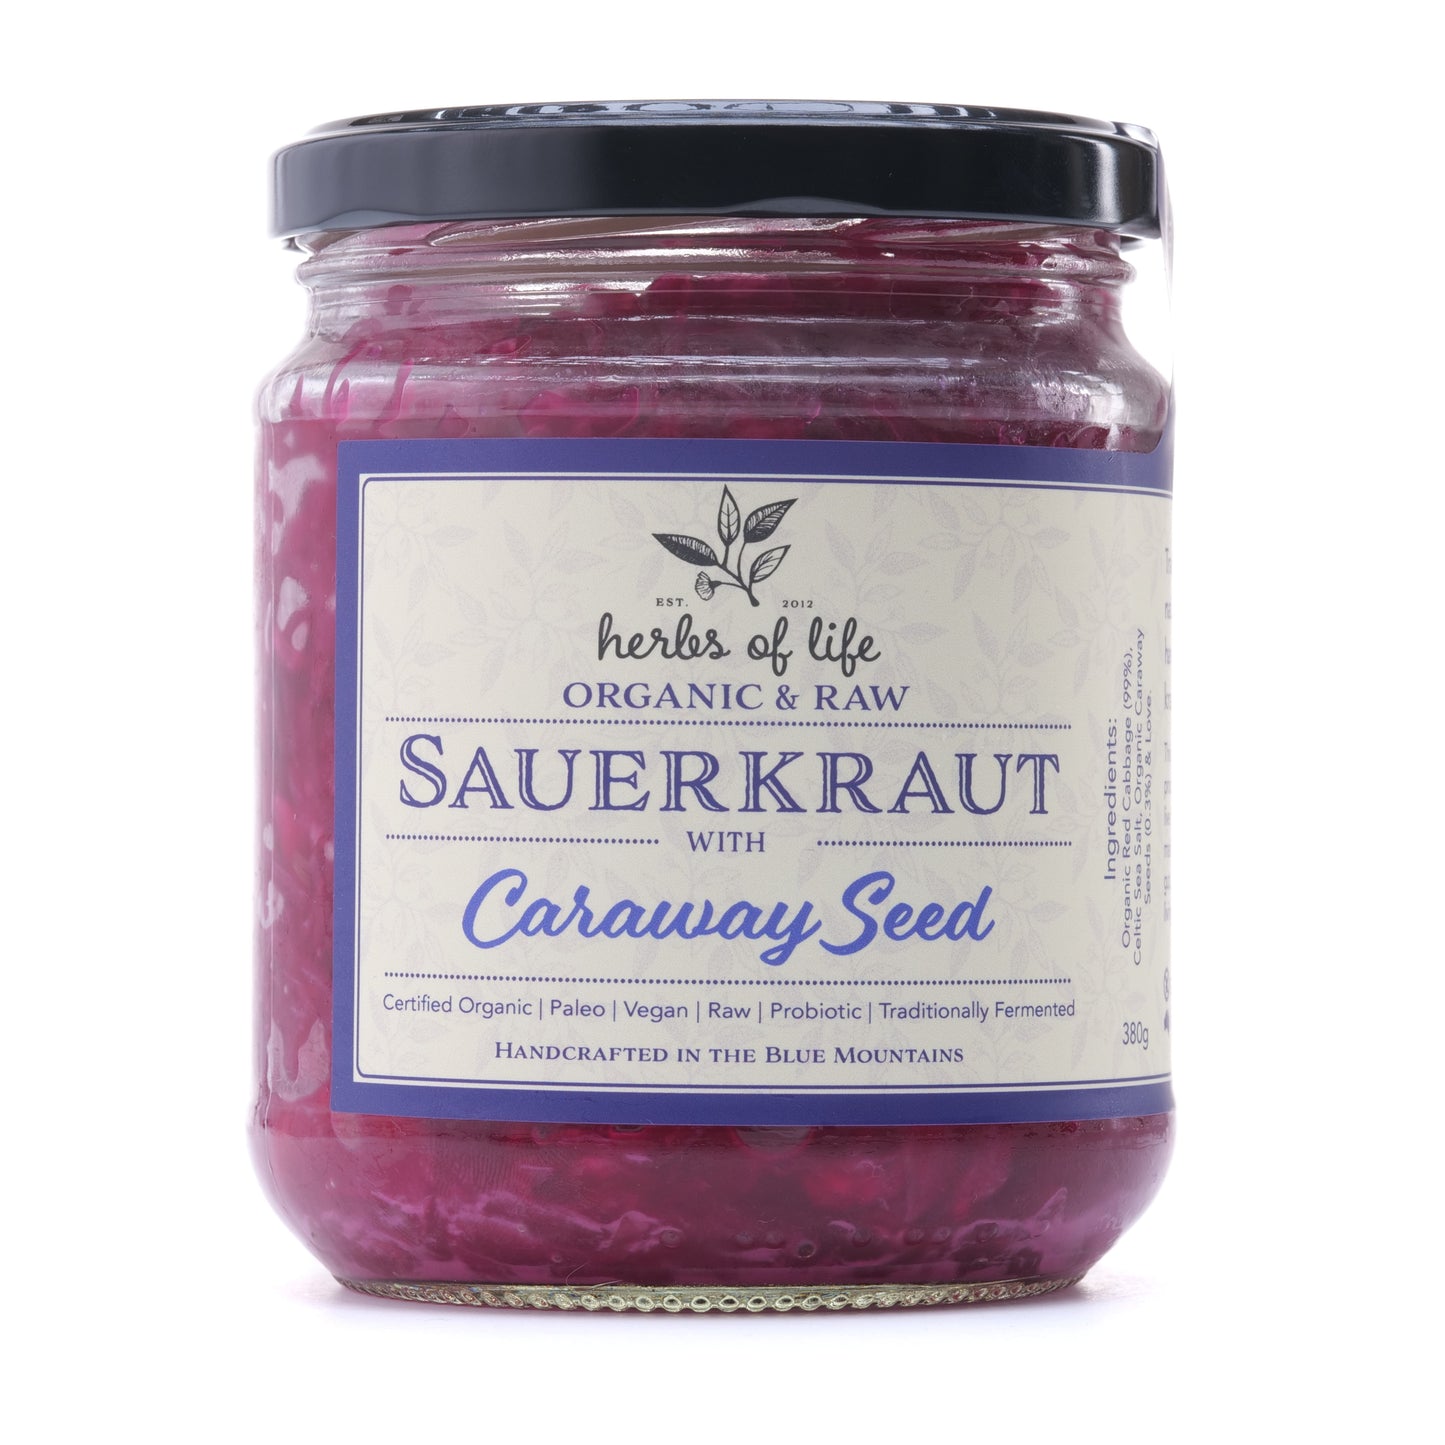 Red Cabbage Sauerkraut with Caraway